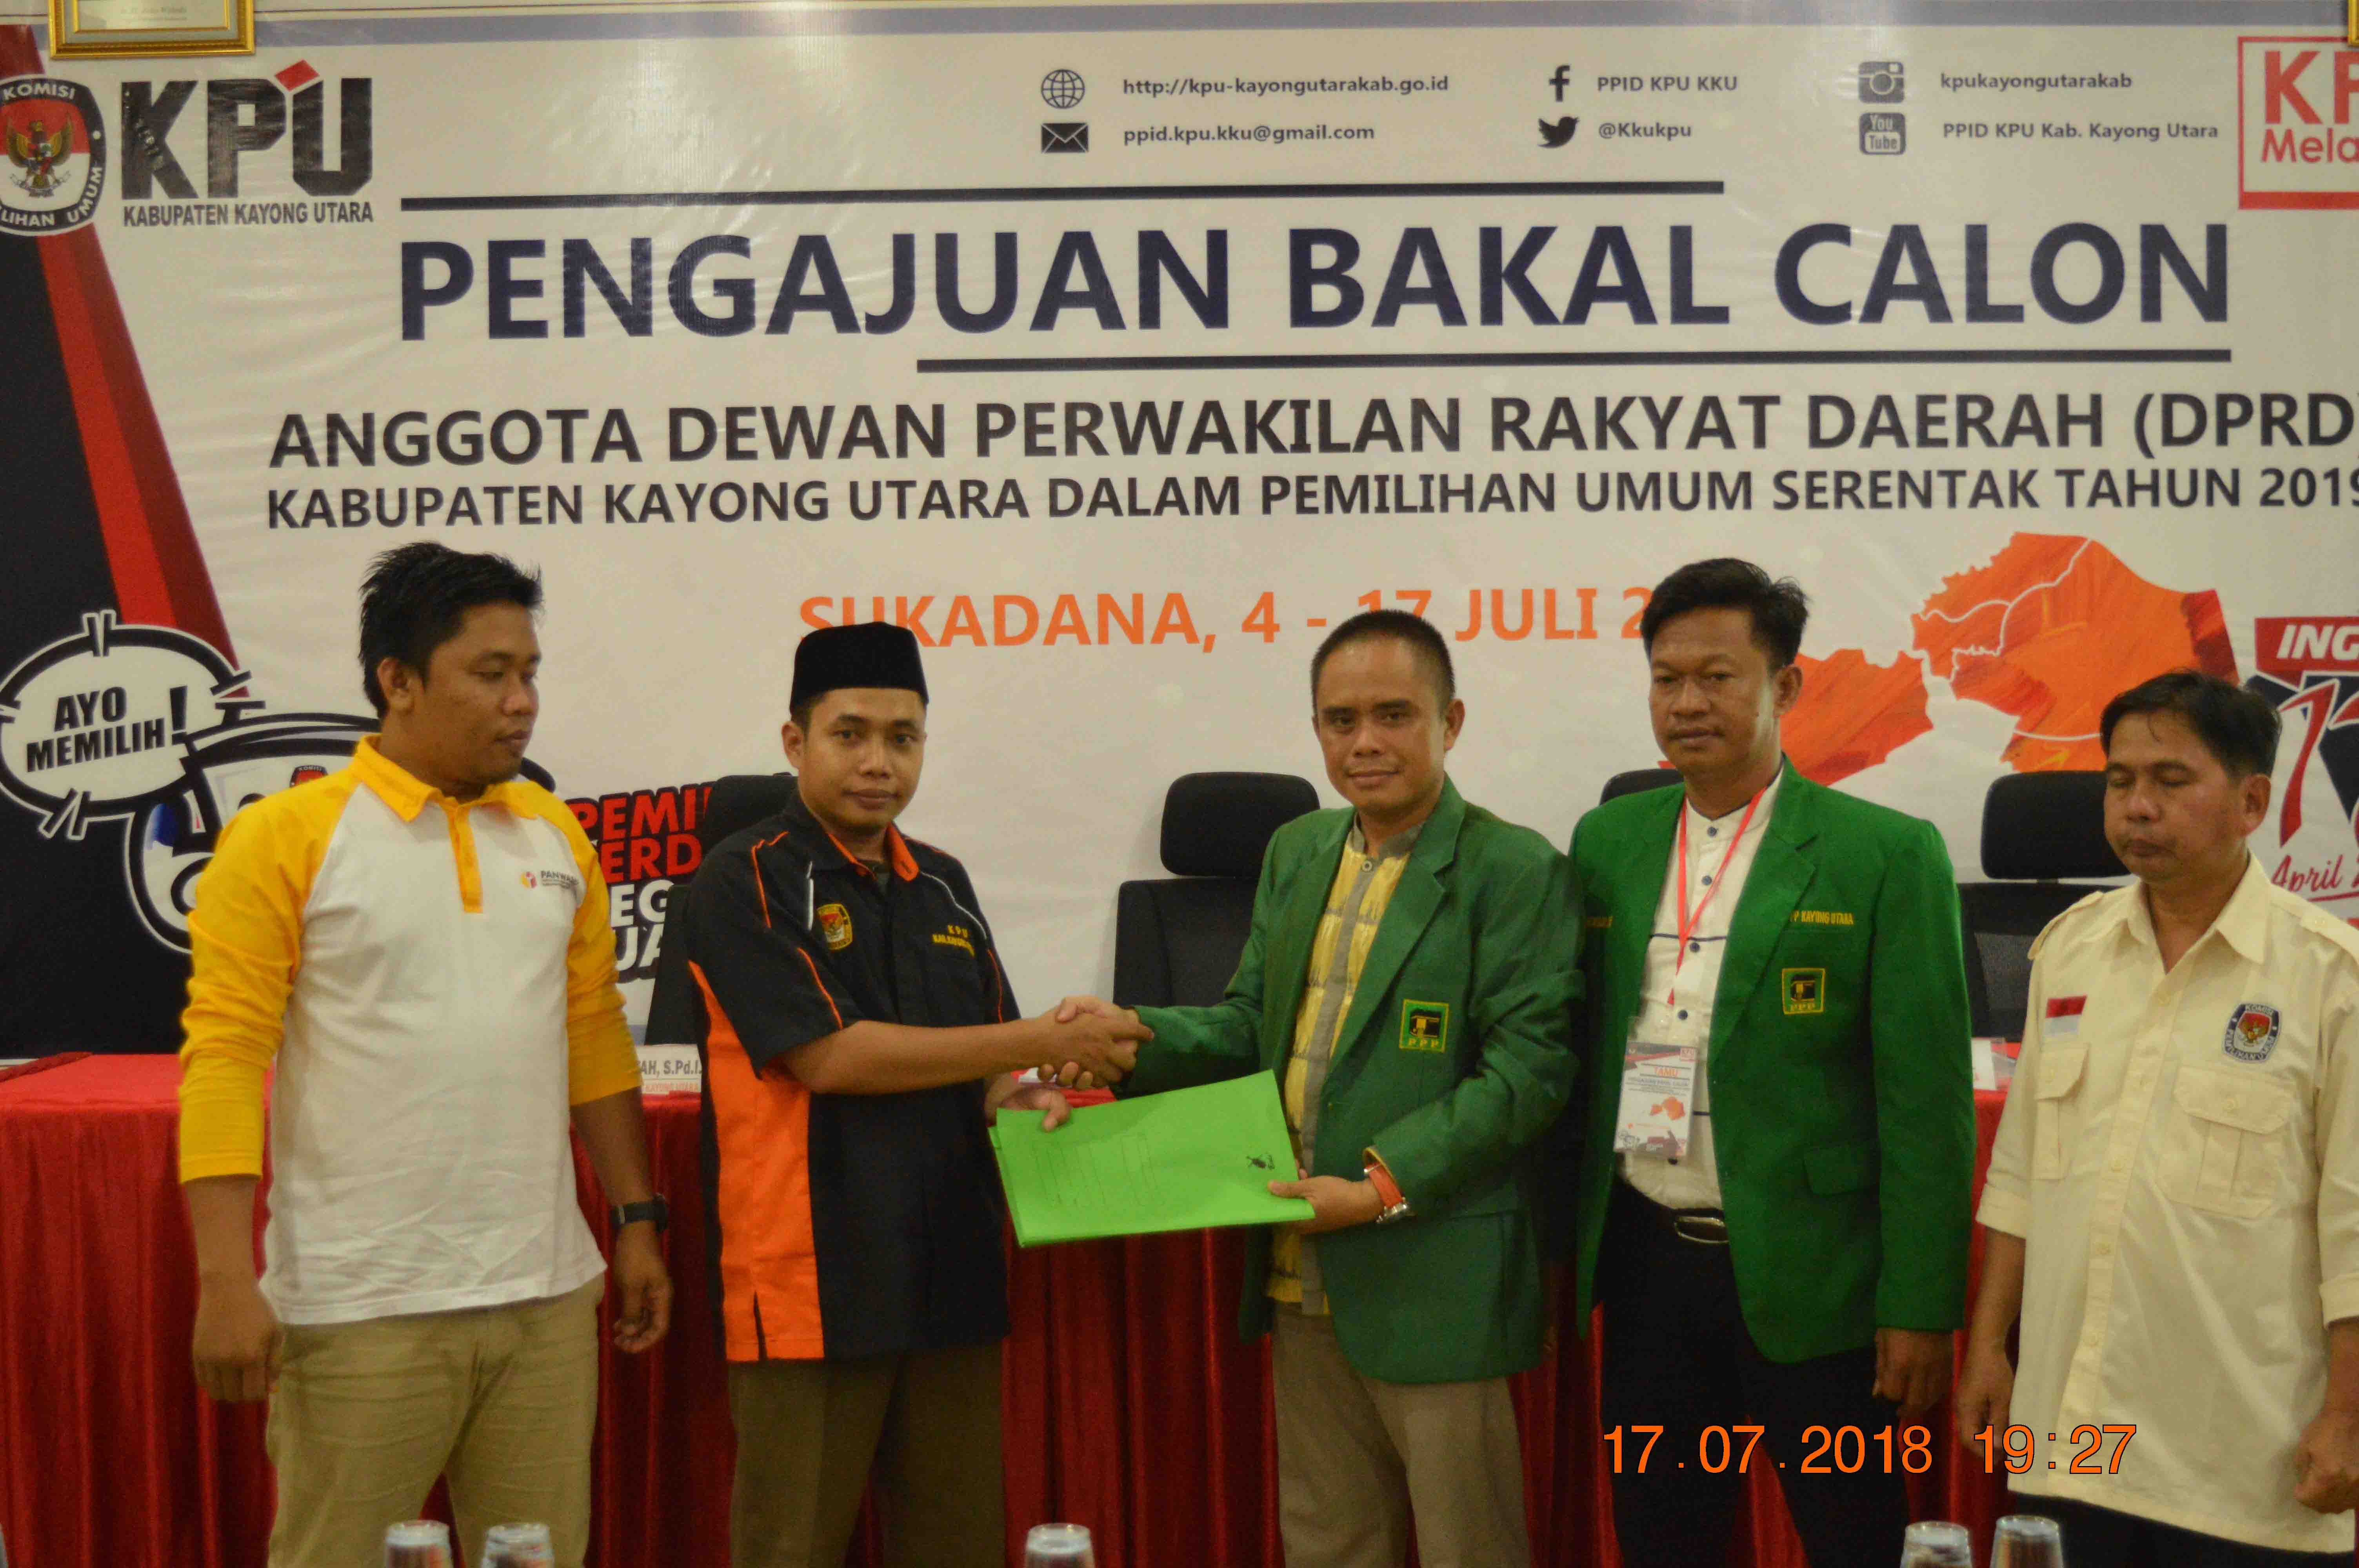 Pengajuan Bakal Calon Anggota DPRD Kabupaten Kayong Utara Pemilu Tahun 2019 (PPP)